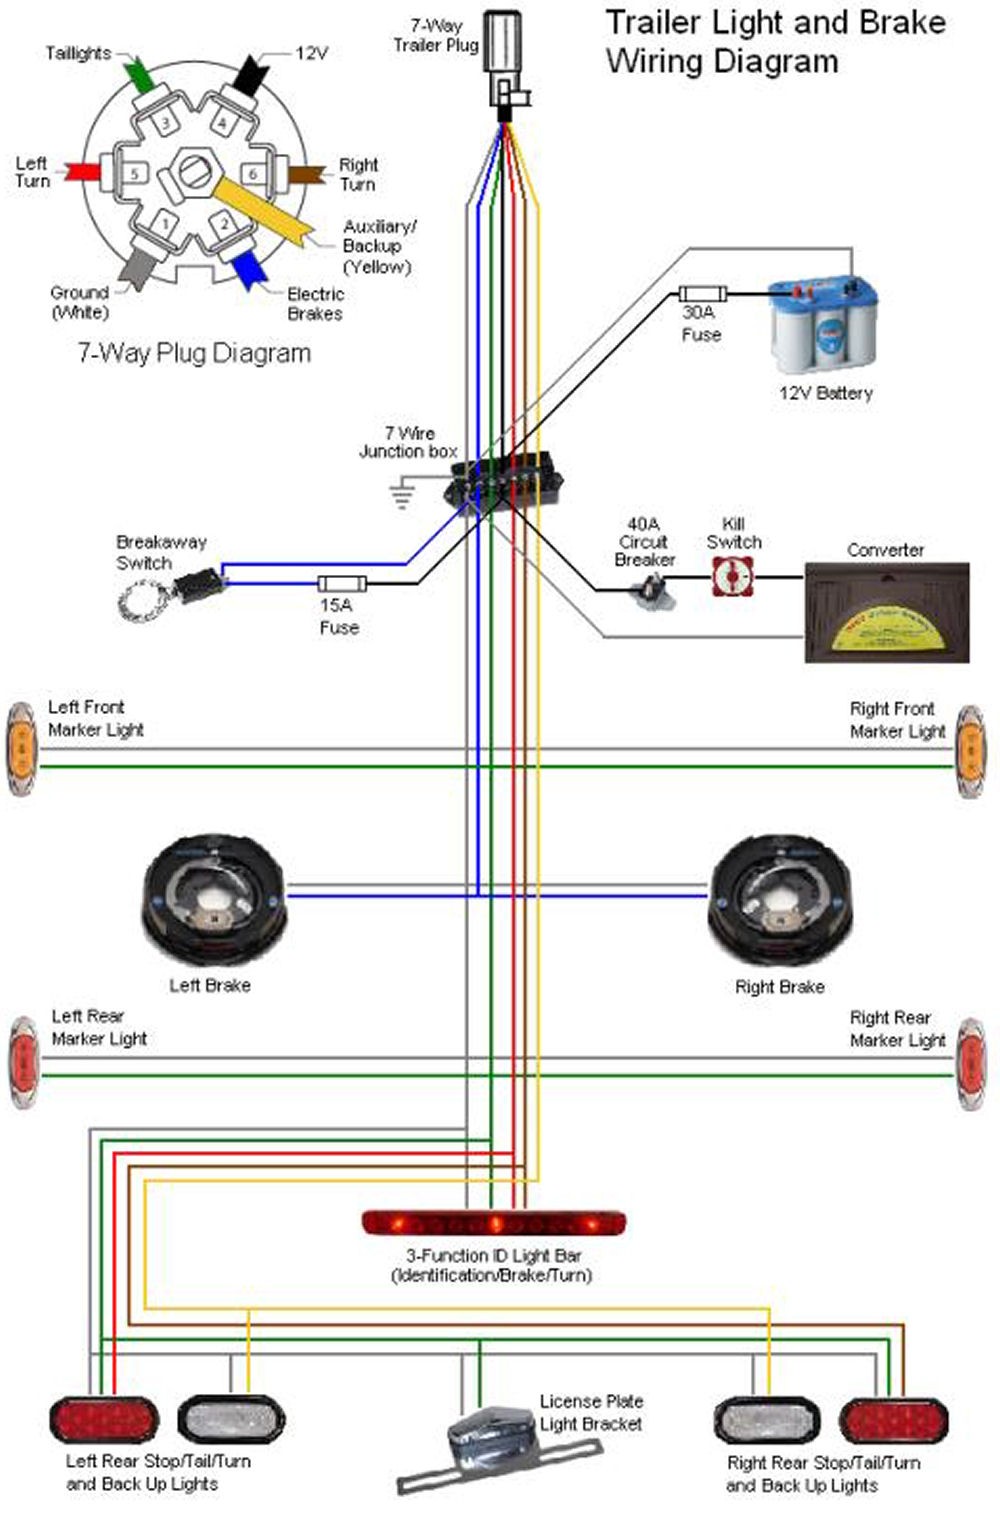 10 Electric Trailer Brakes Wiring Diagram